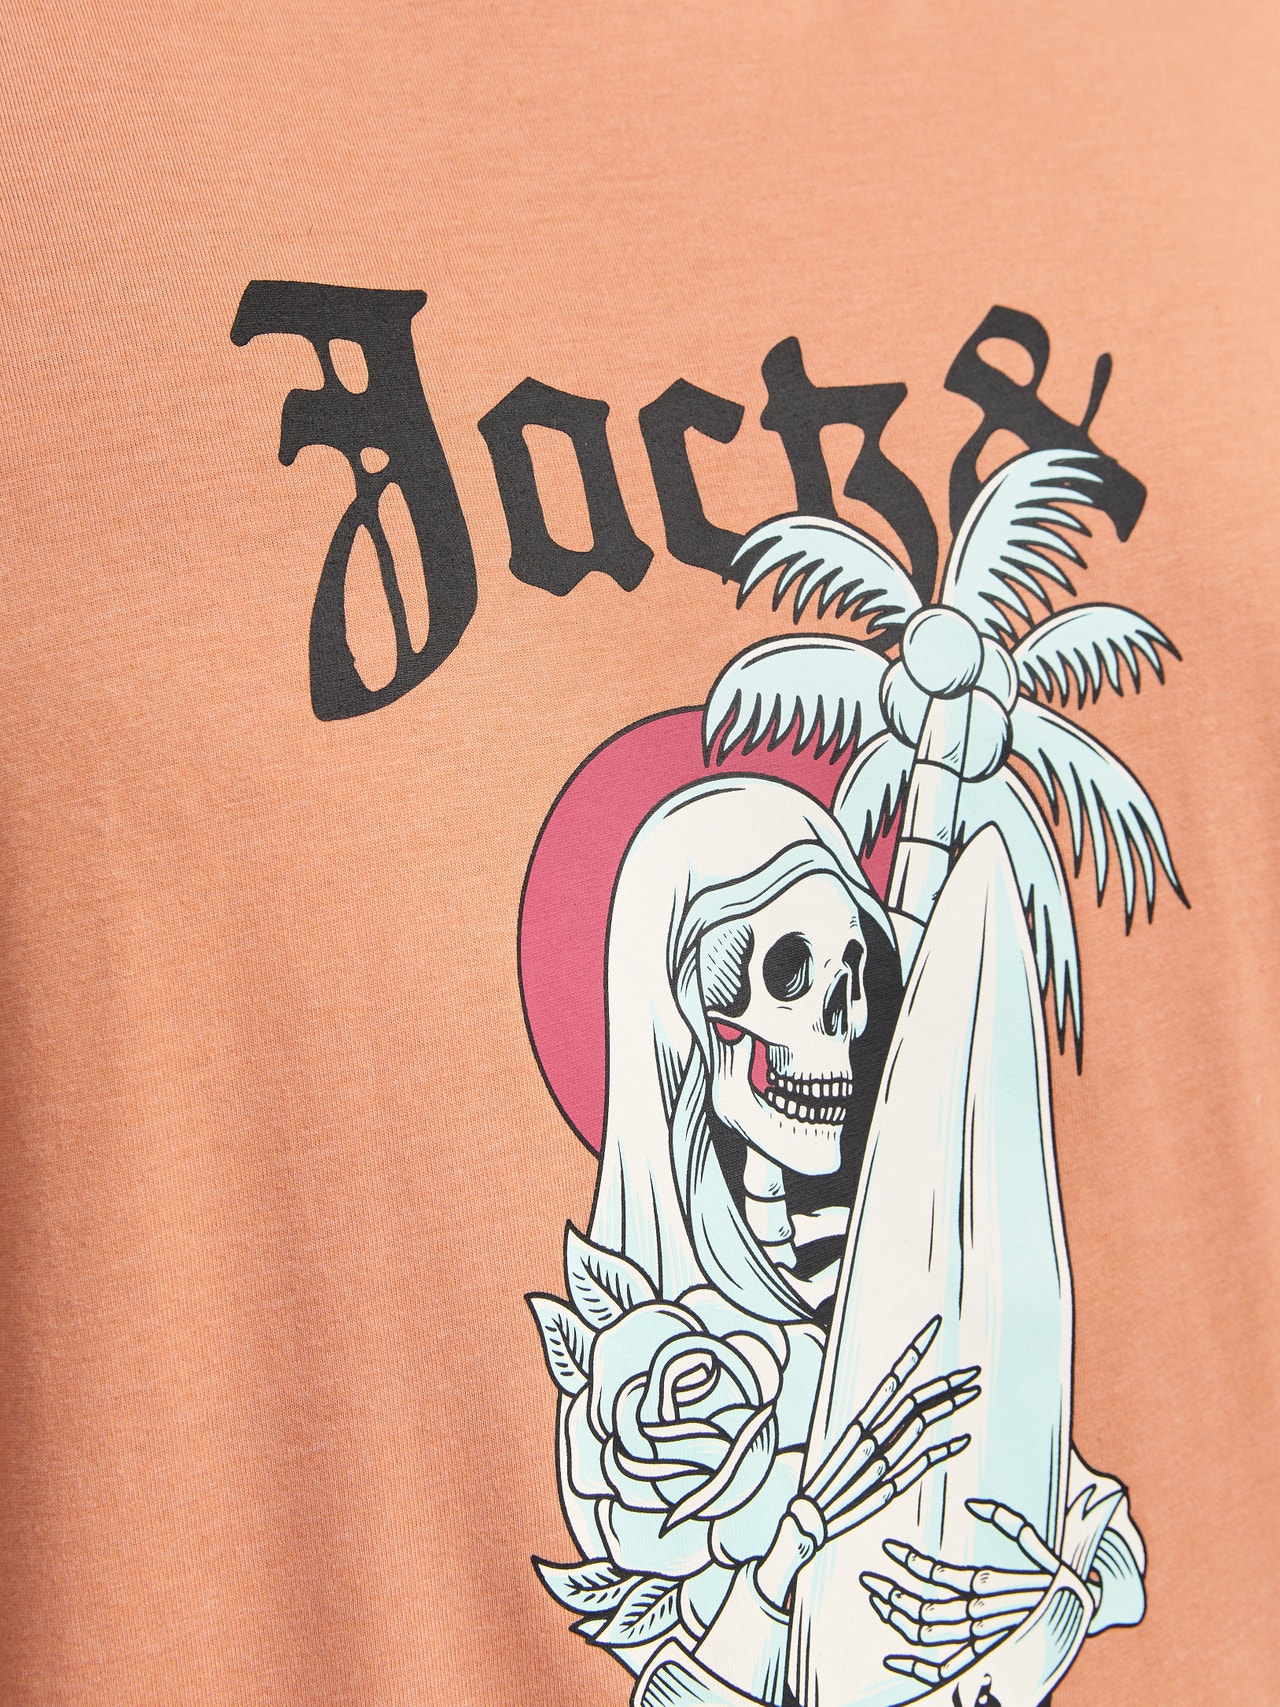 Jack & Jones Plus Size Printet T-shirt -Canyon Sunset - 12261542